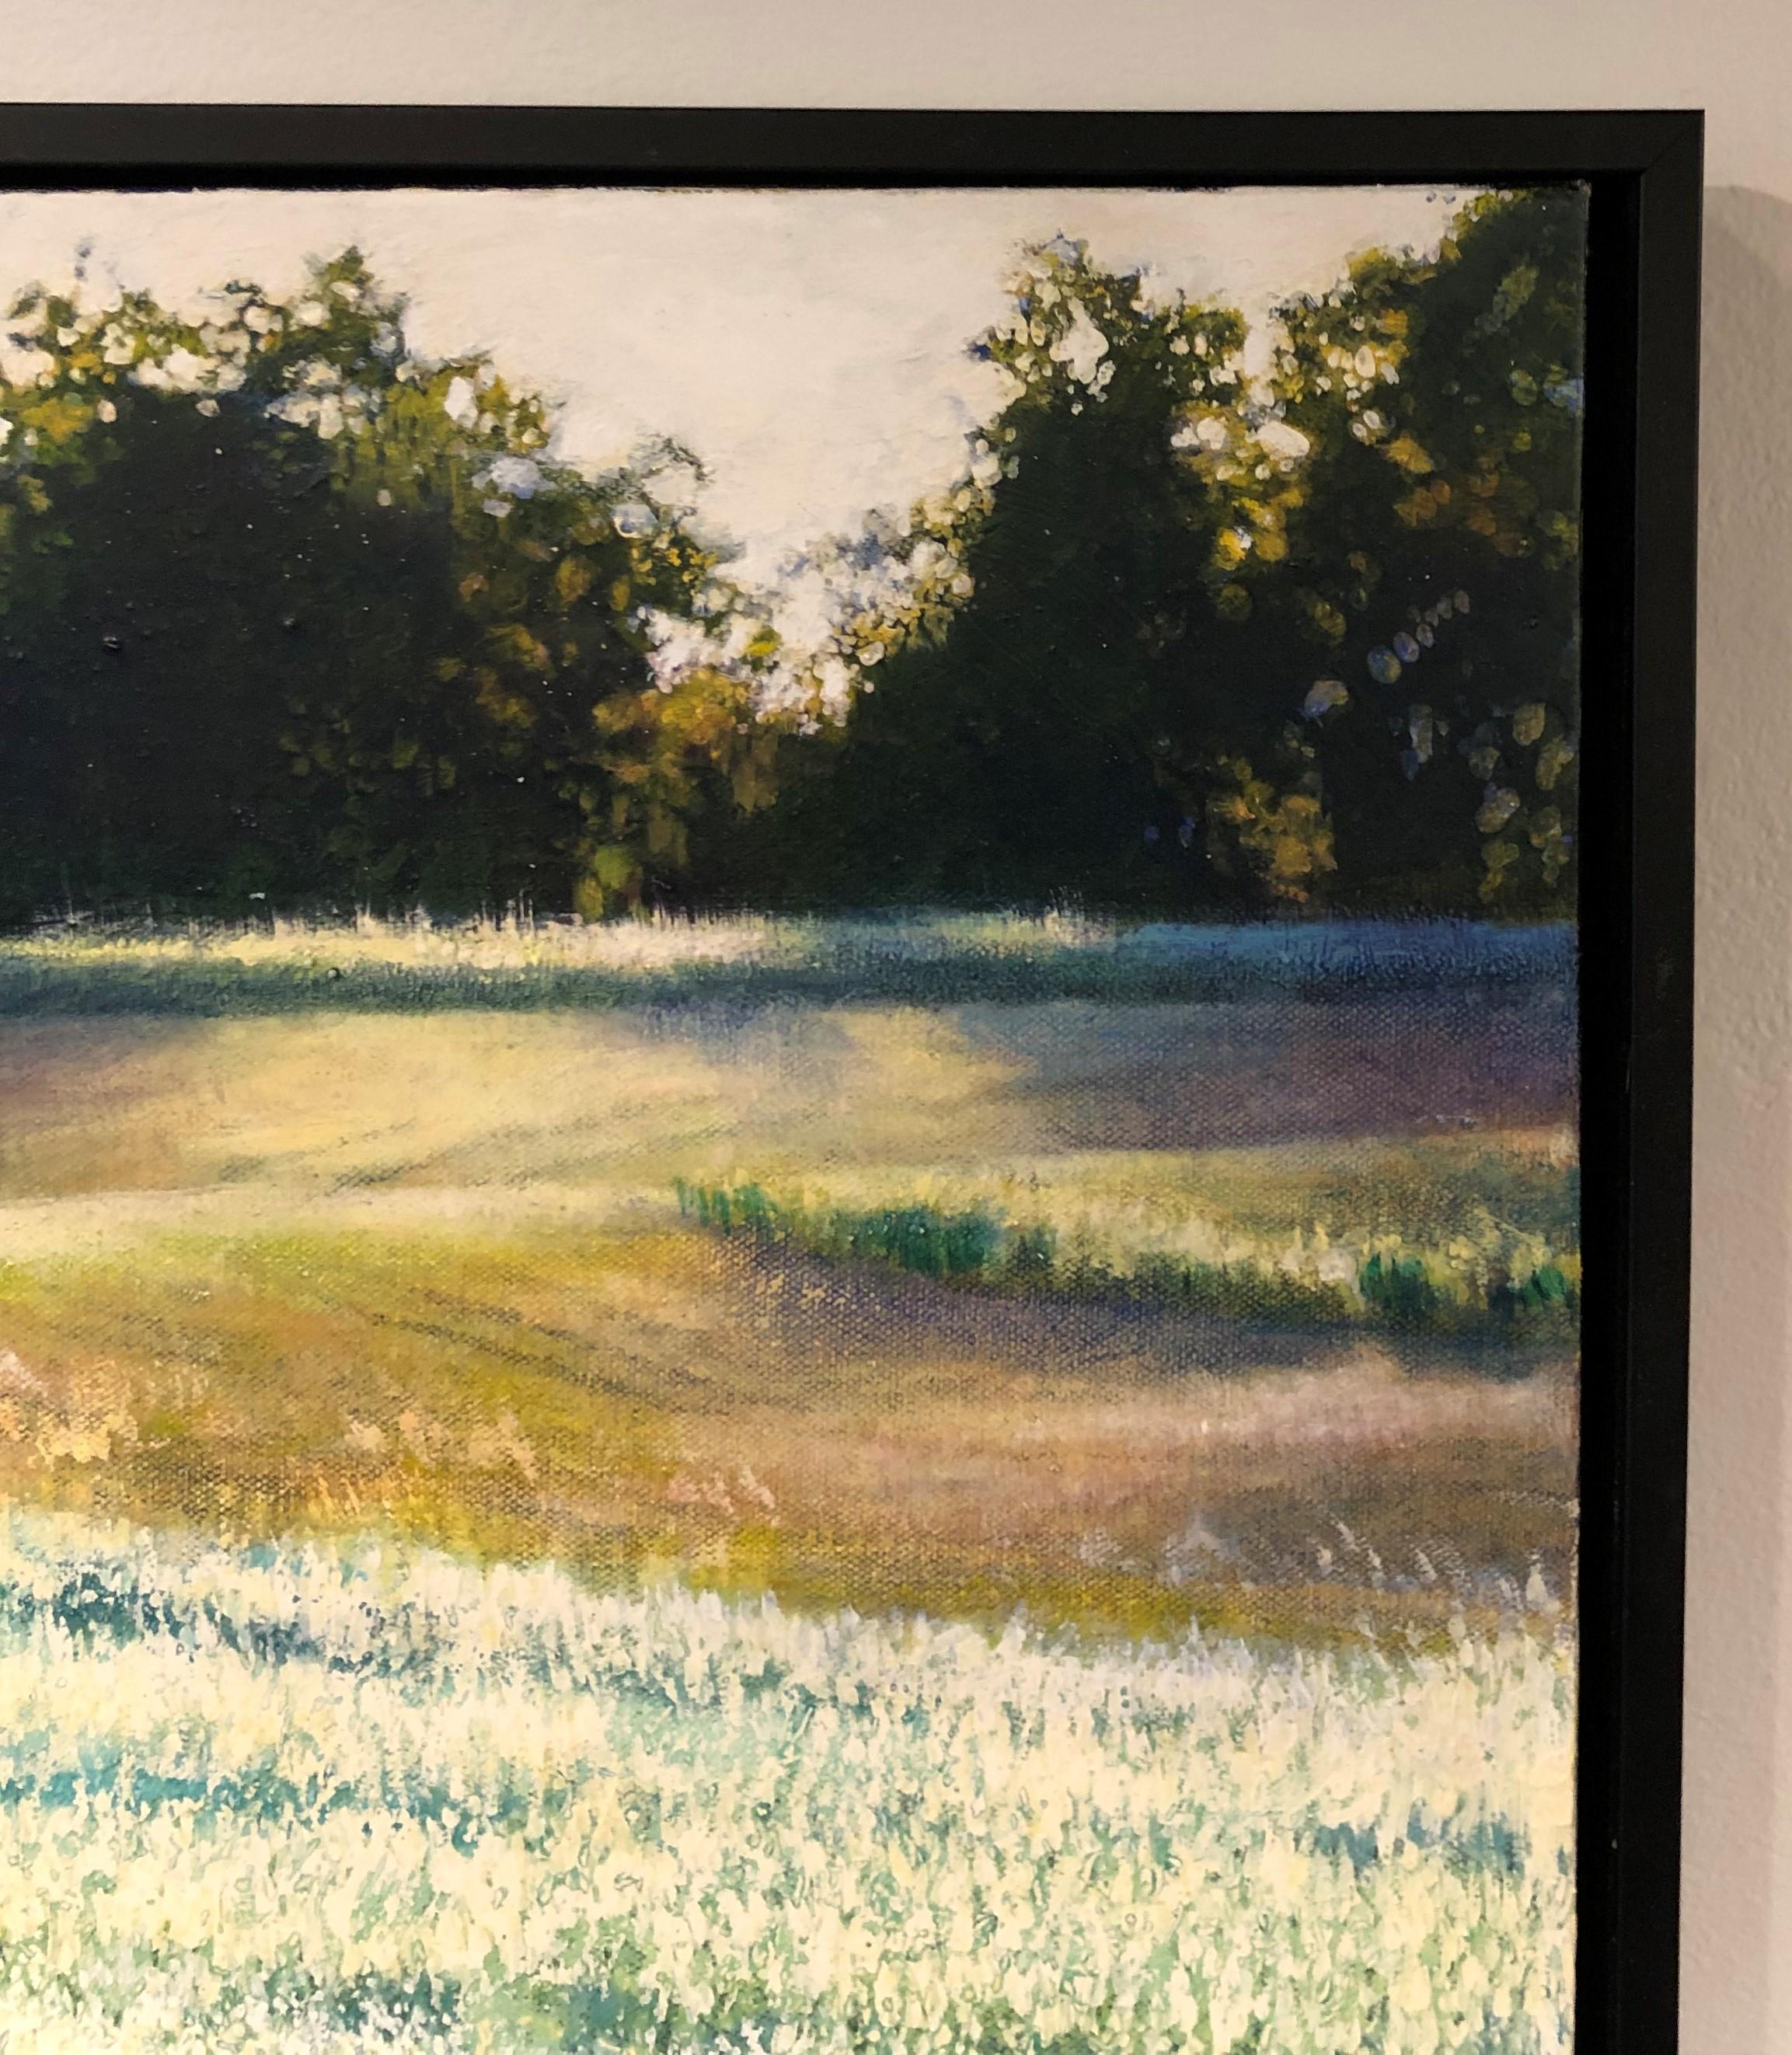 Barley Field - In Full Bloom on Rolling Hills, Oil on Canvas 1